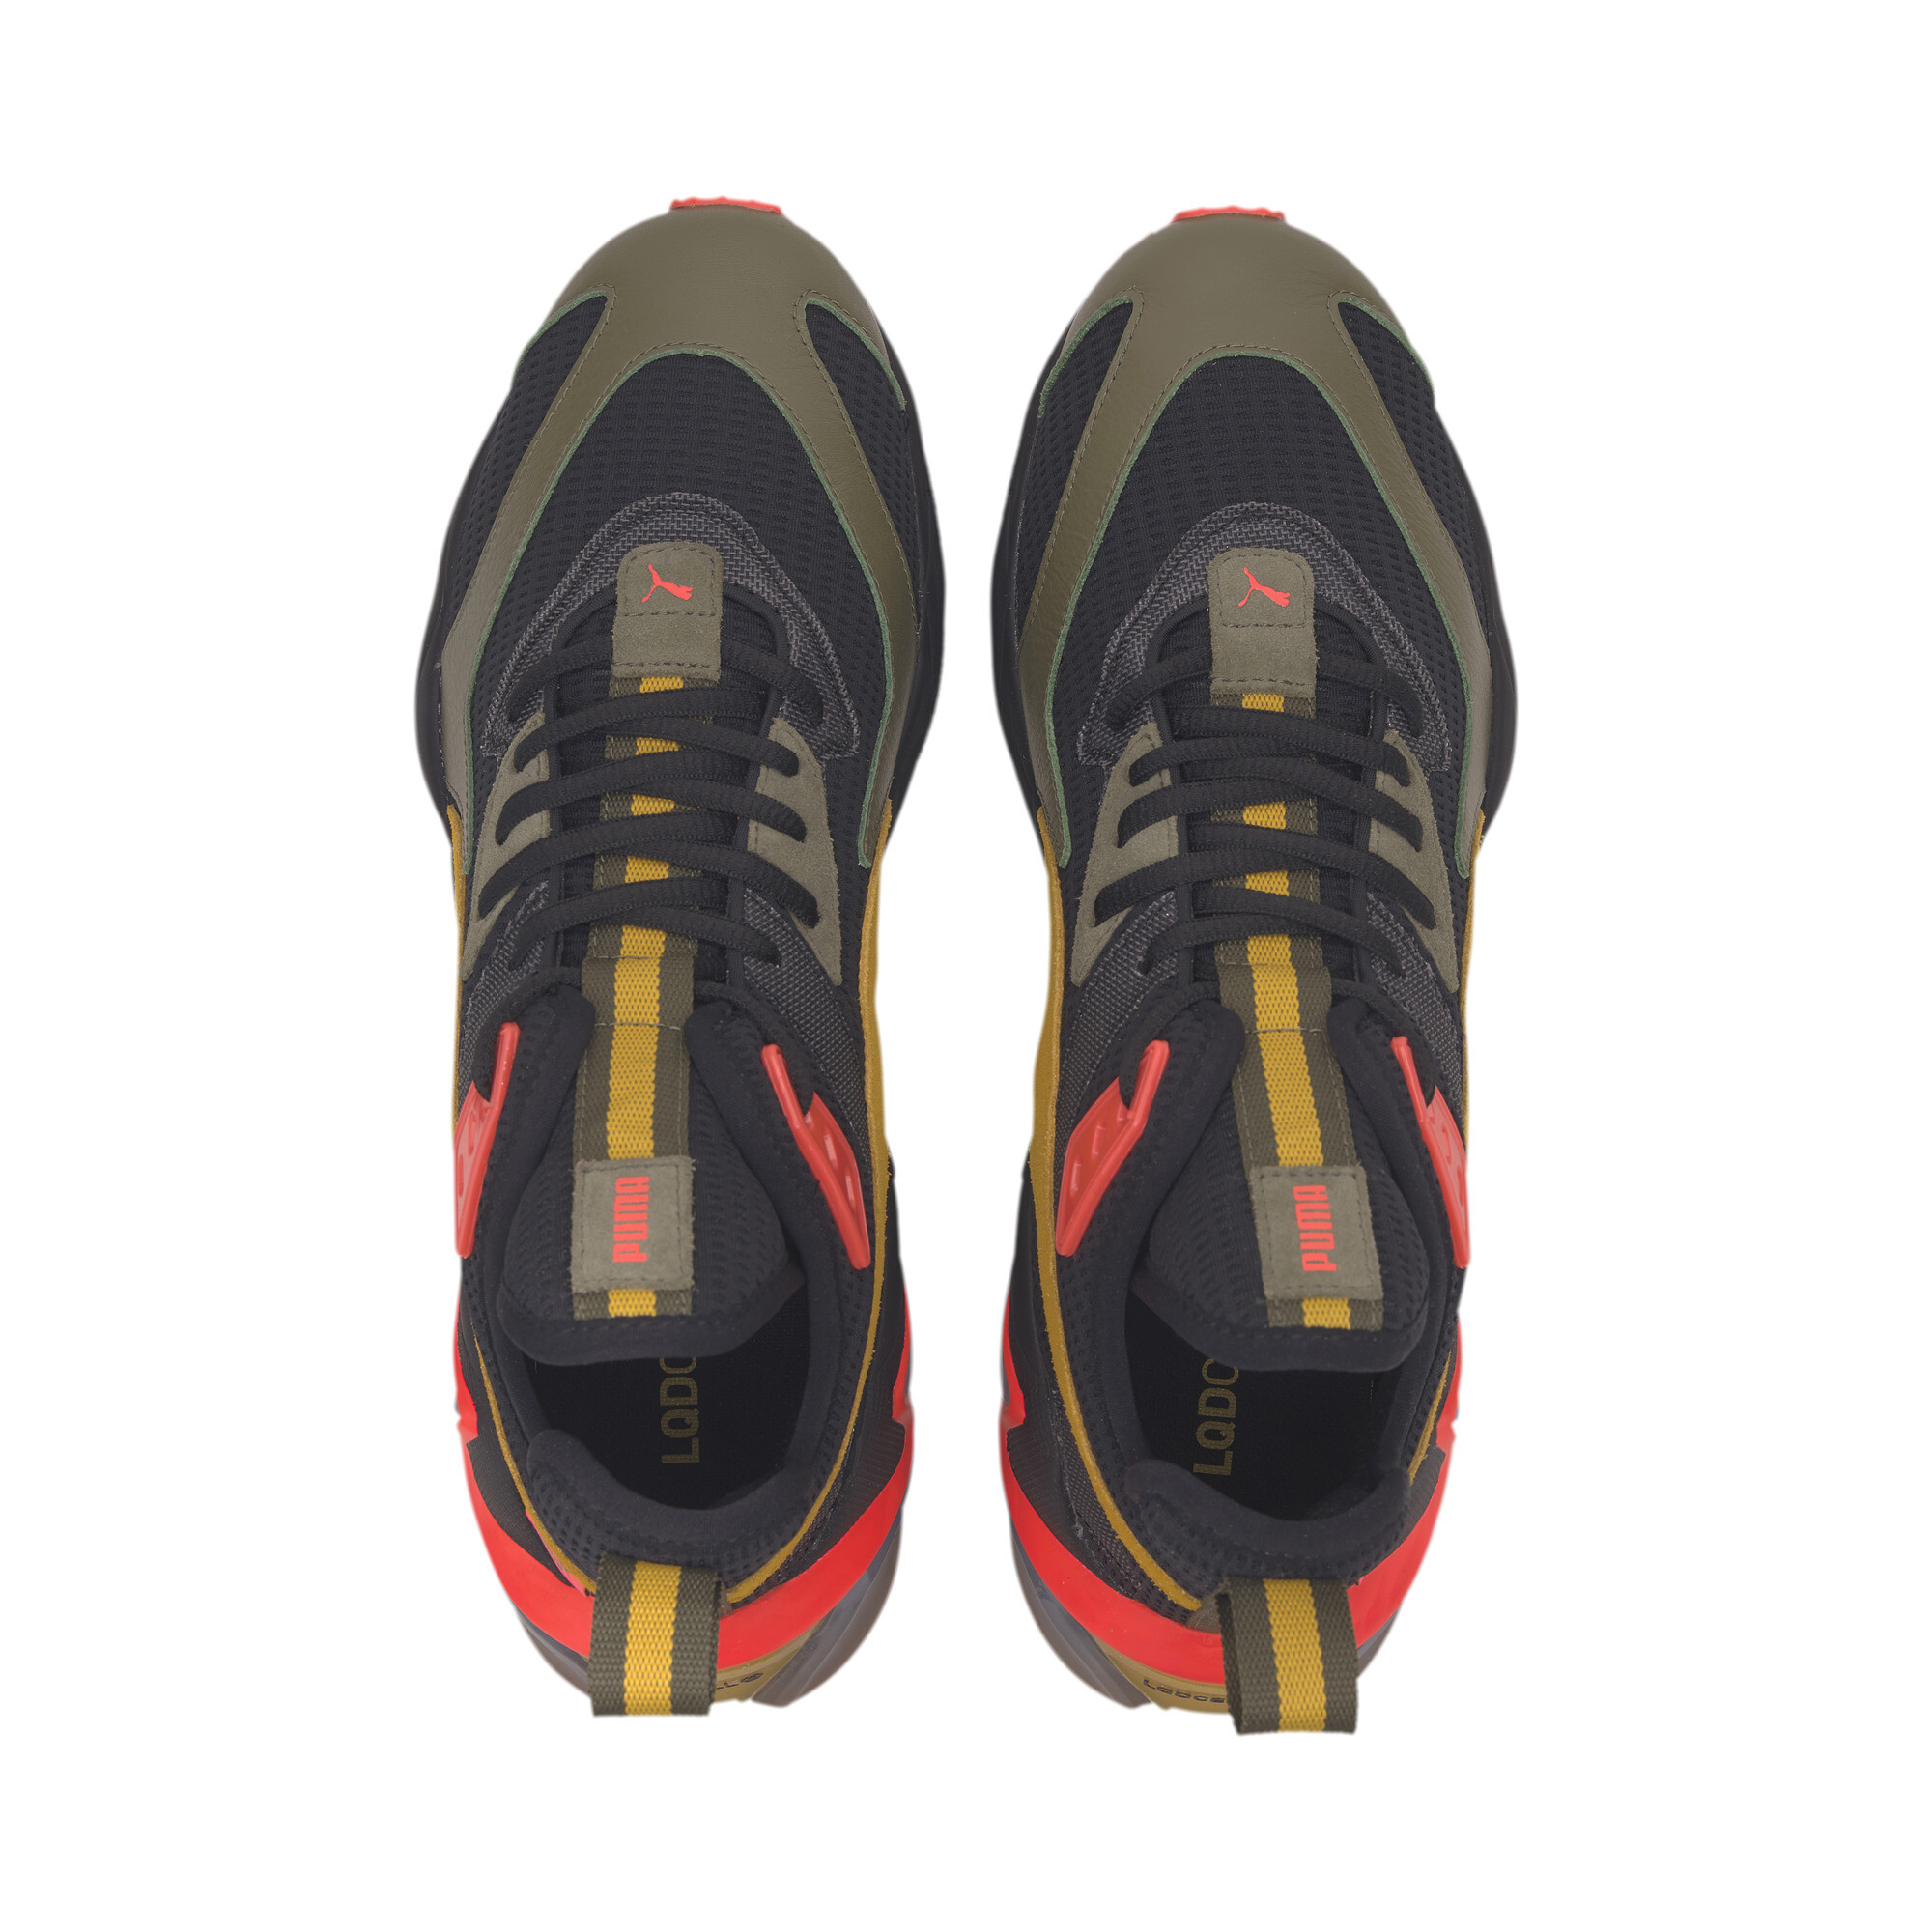 PUMA Men's LQDCELL Origin Training Shoes | eBay